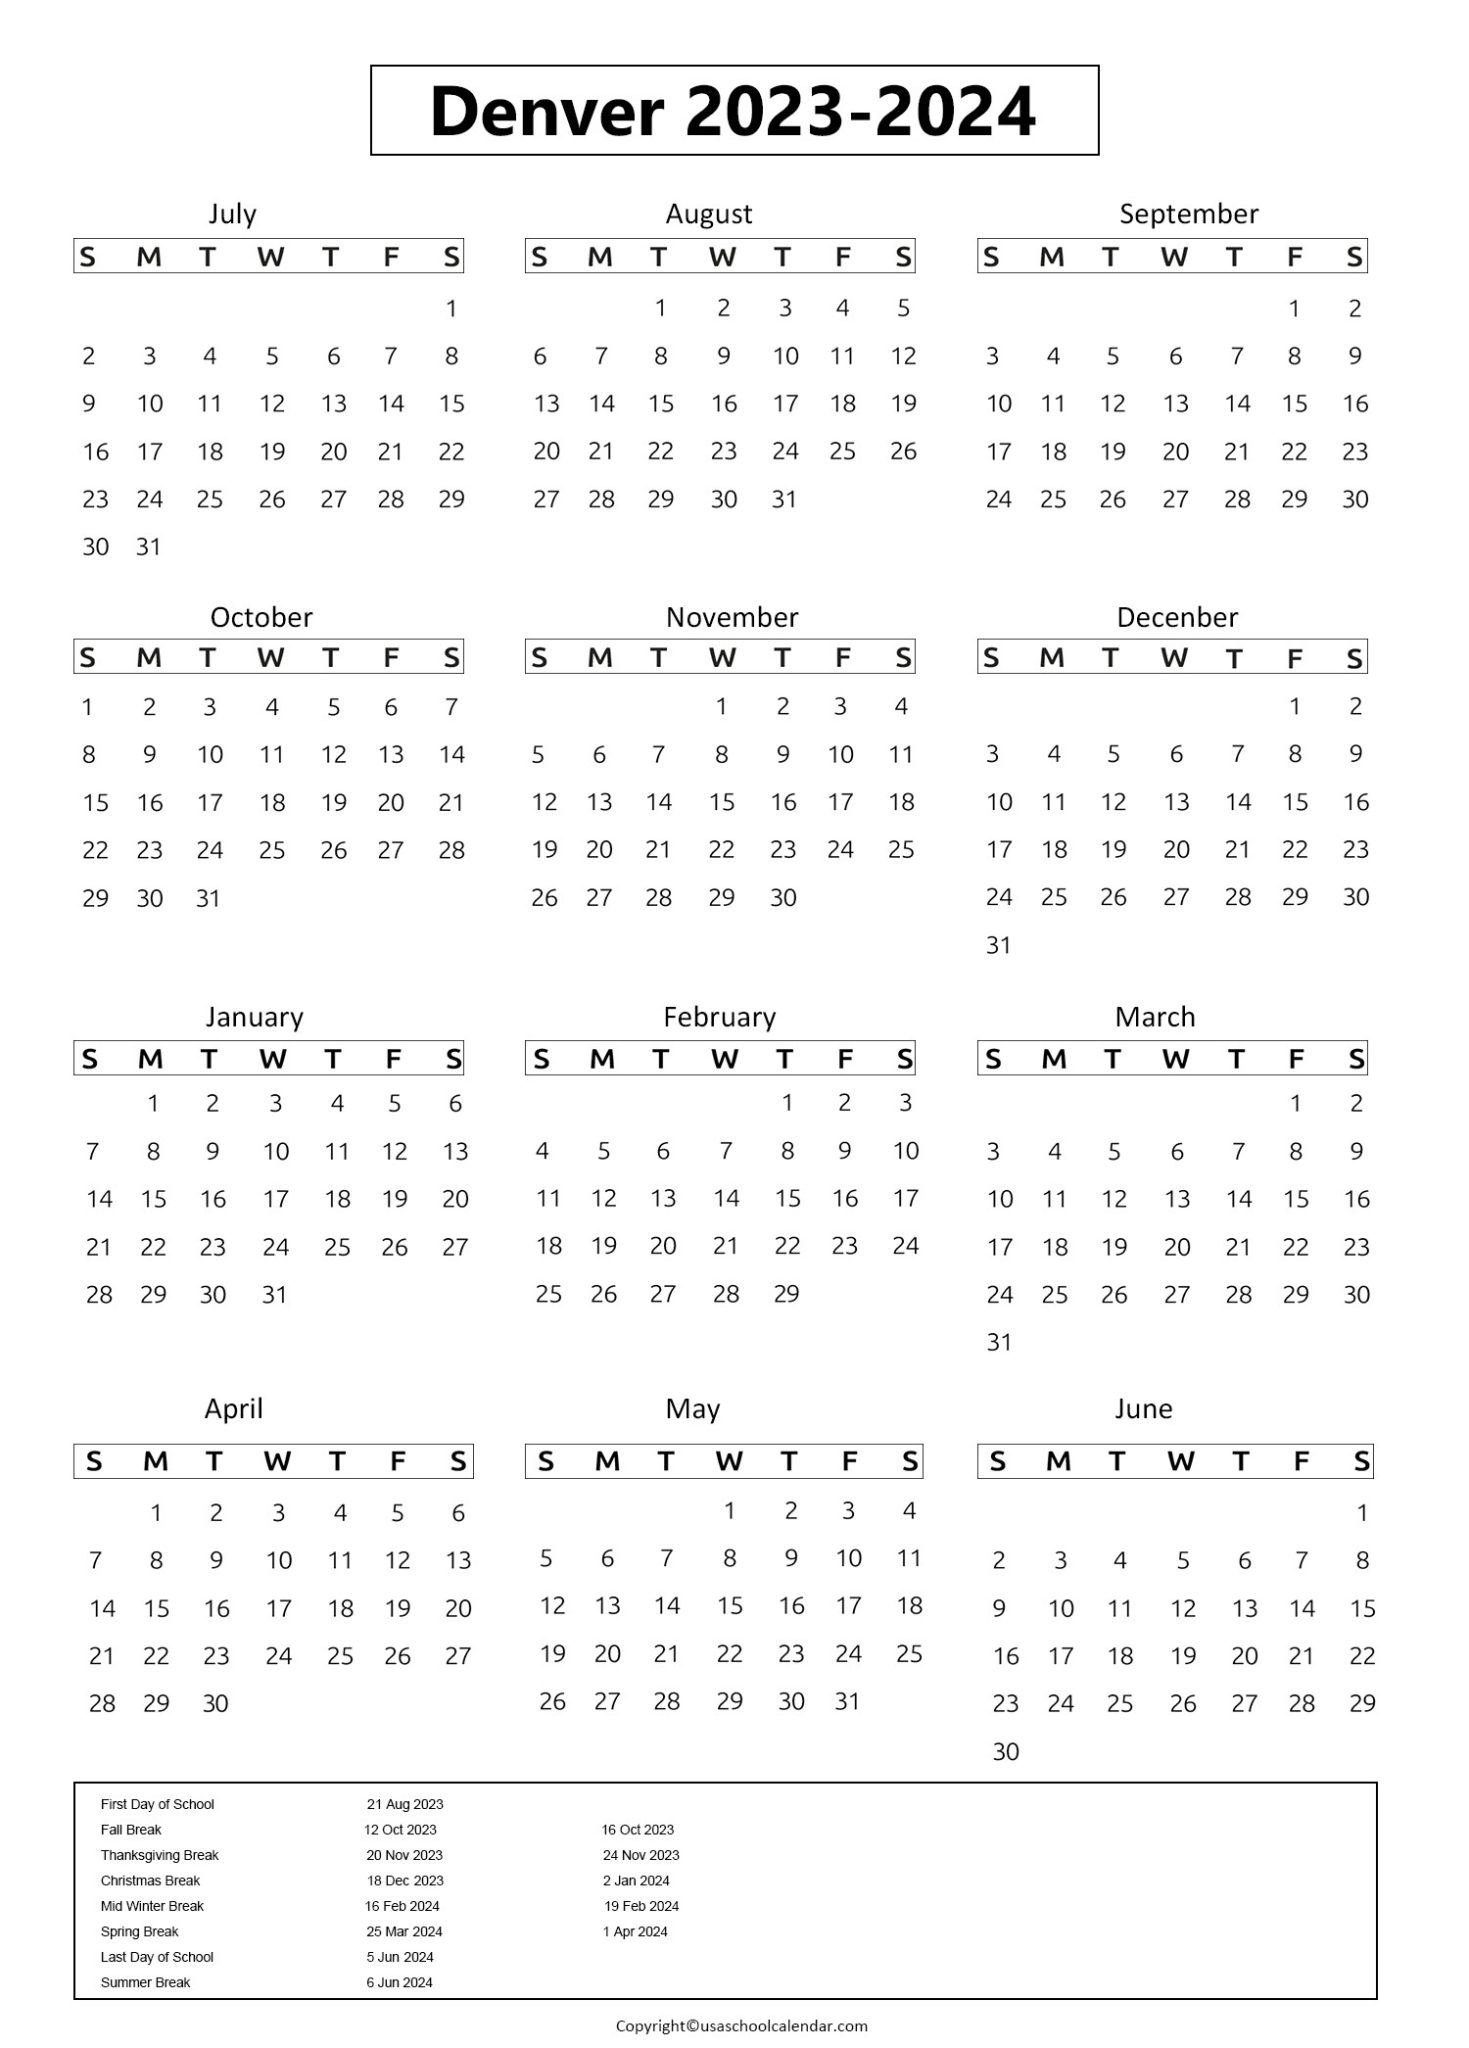 denver-public-schools-calendar-holidays-2023-2024-dps